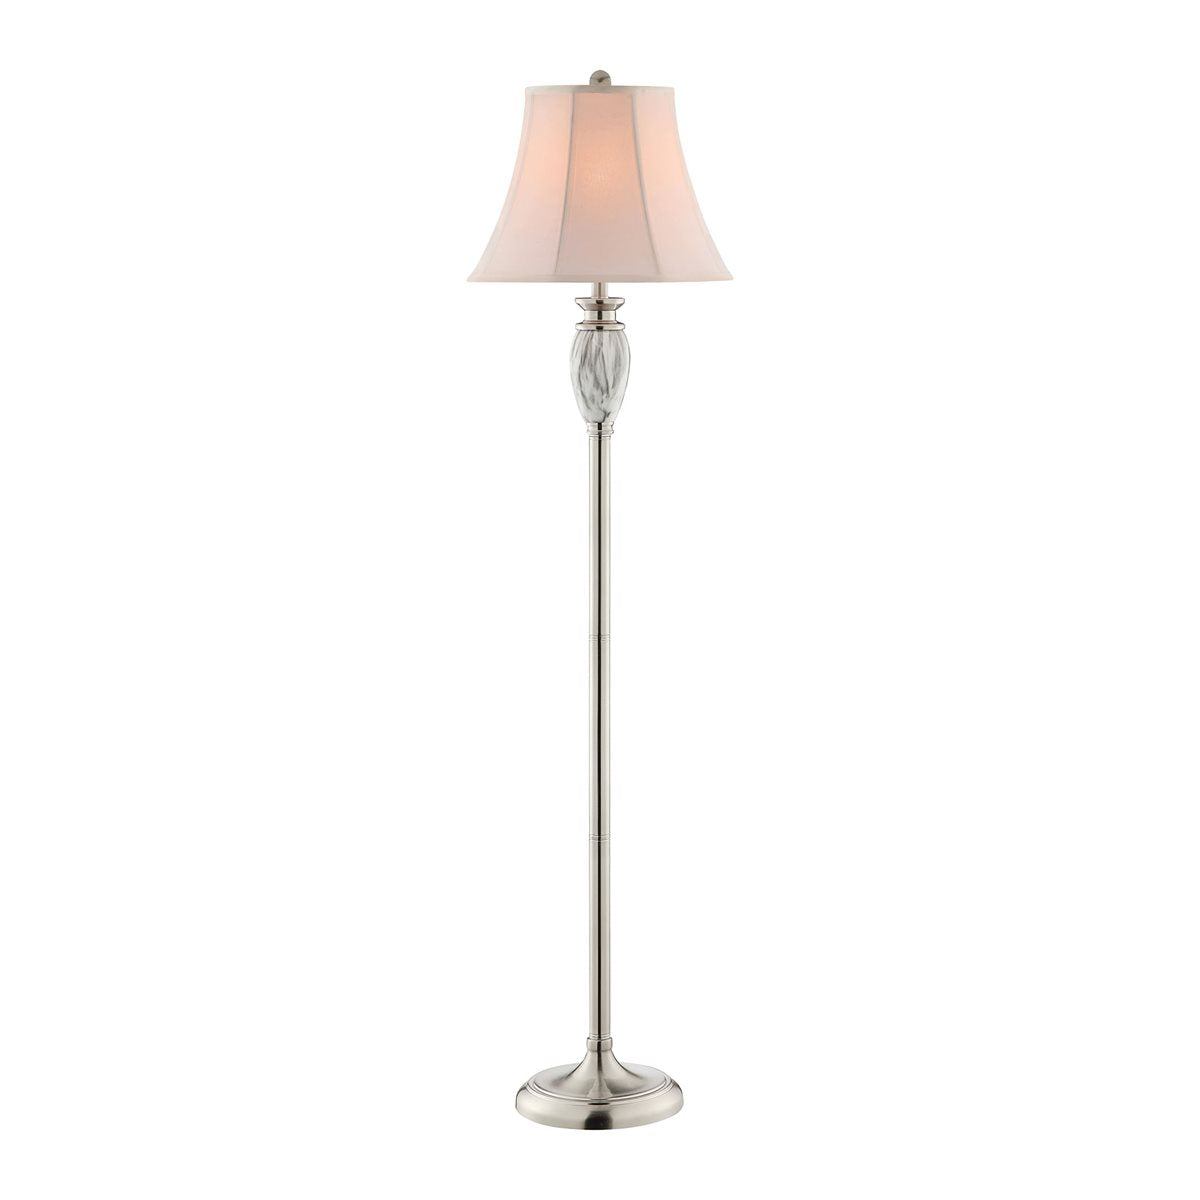 Stein World Gina Floor Lamp 99895